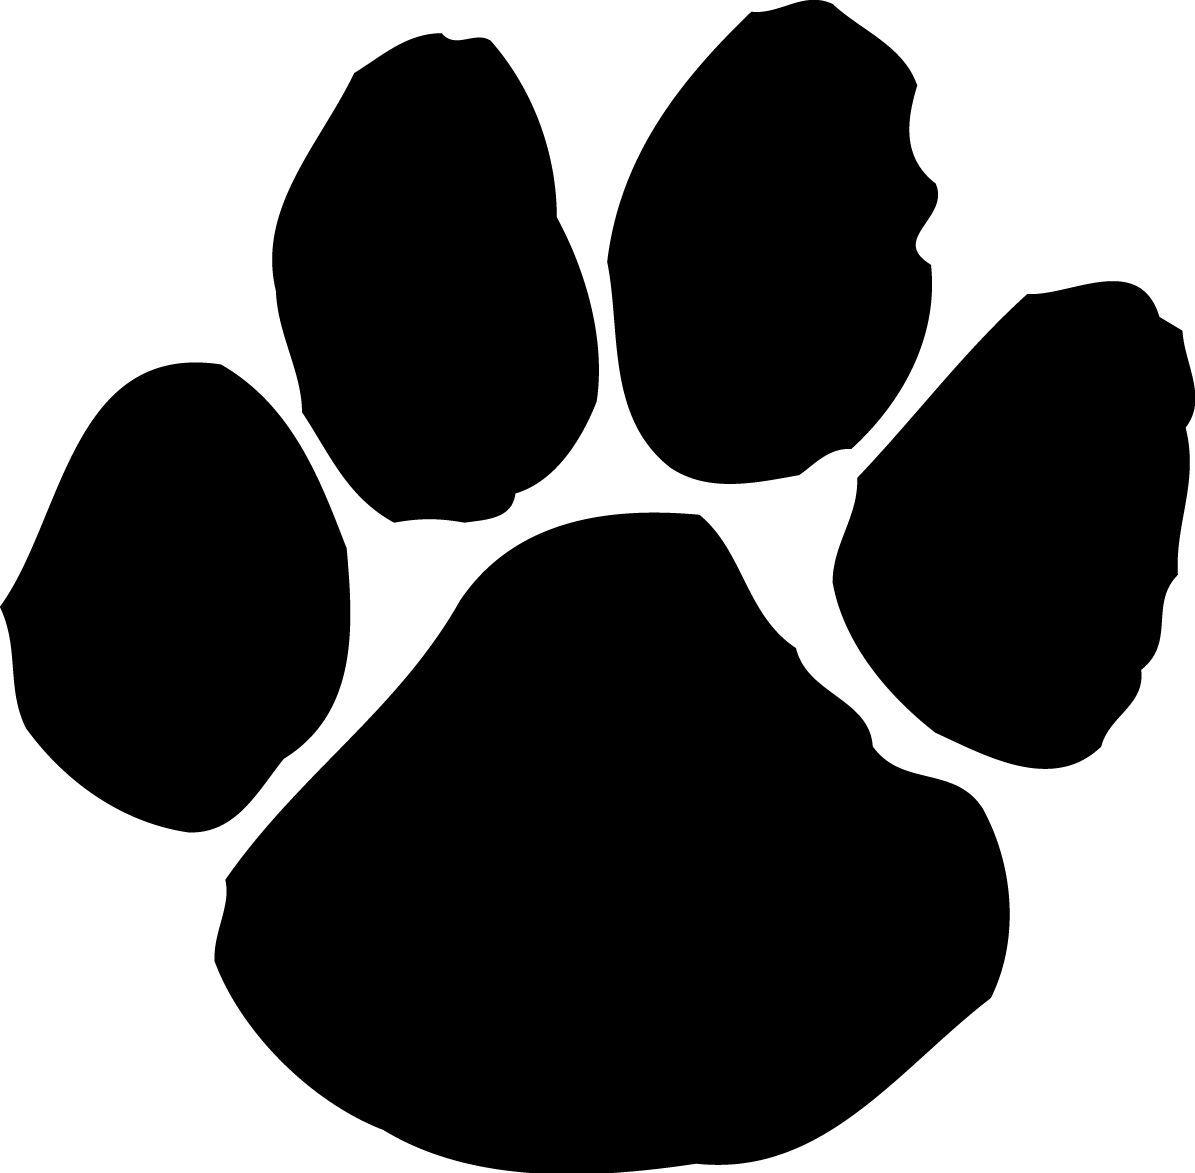 Cute Paw Print Logo - Cute Dog Paw Print - ClipArt Best | Man's bestfriend | Dog paws ...